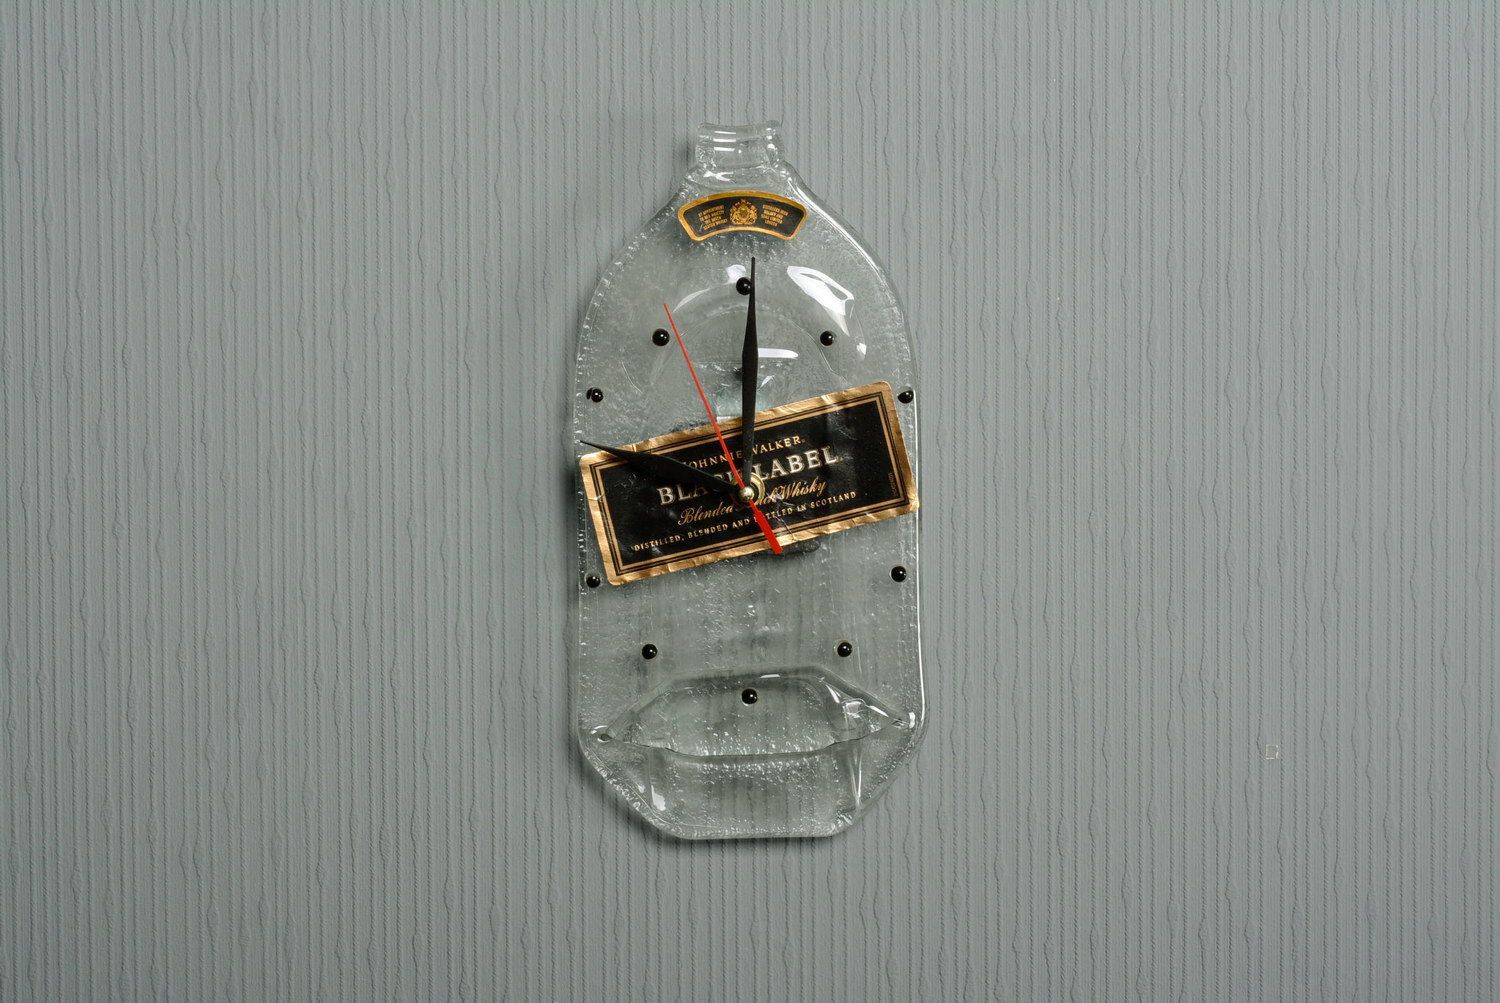 Reloj de botella “Black label” foto 5